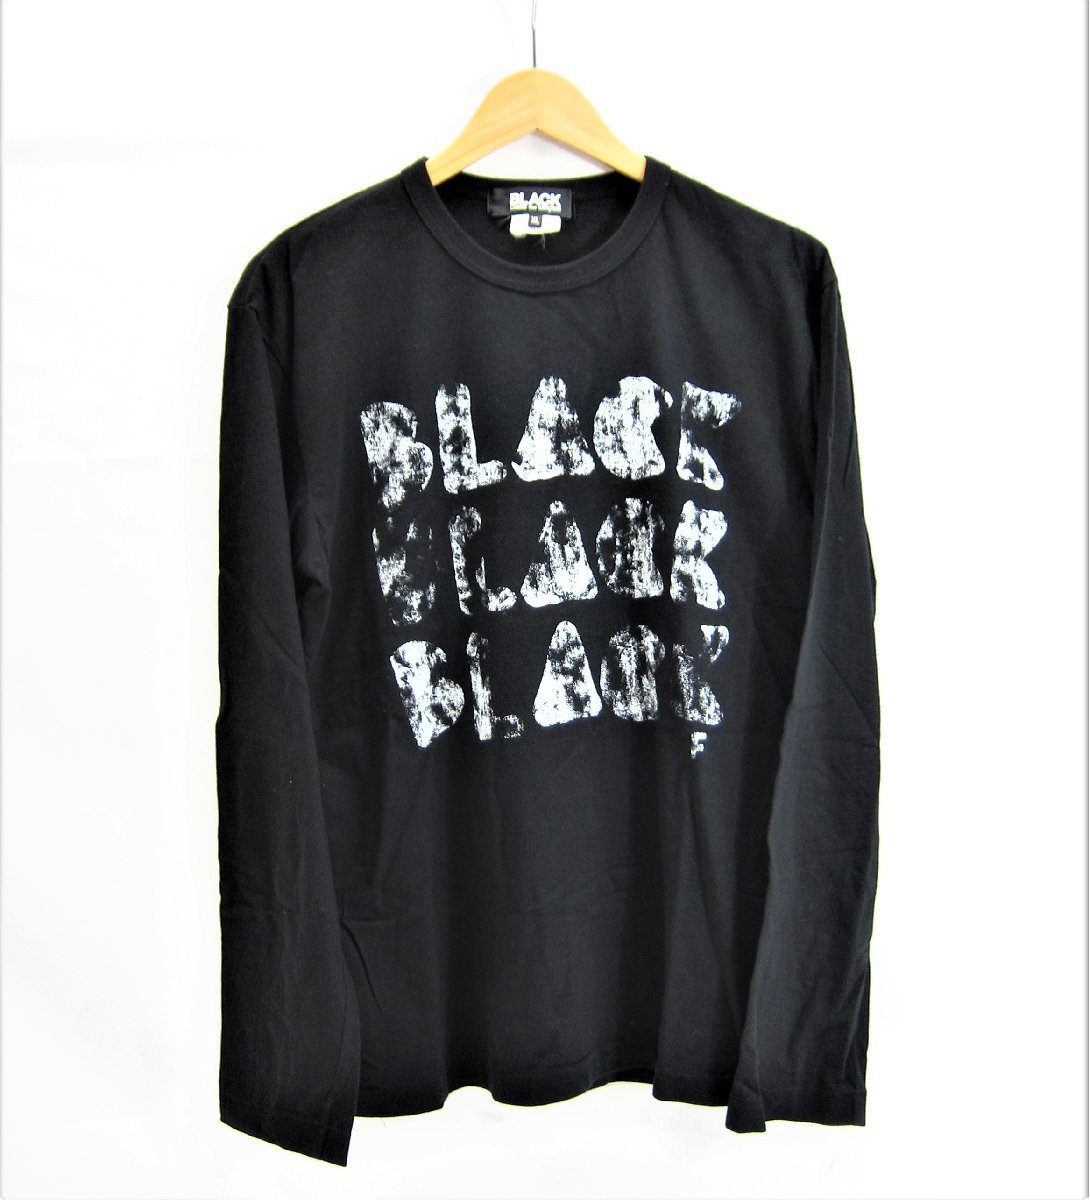 BLACK COMME des GARCONS ブラックコムデギャルソン プリントロングTシャツ 1B-T003 SIZE:XL メンズ 衣類 □UF3509_画像1